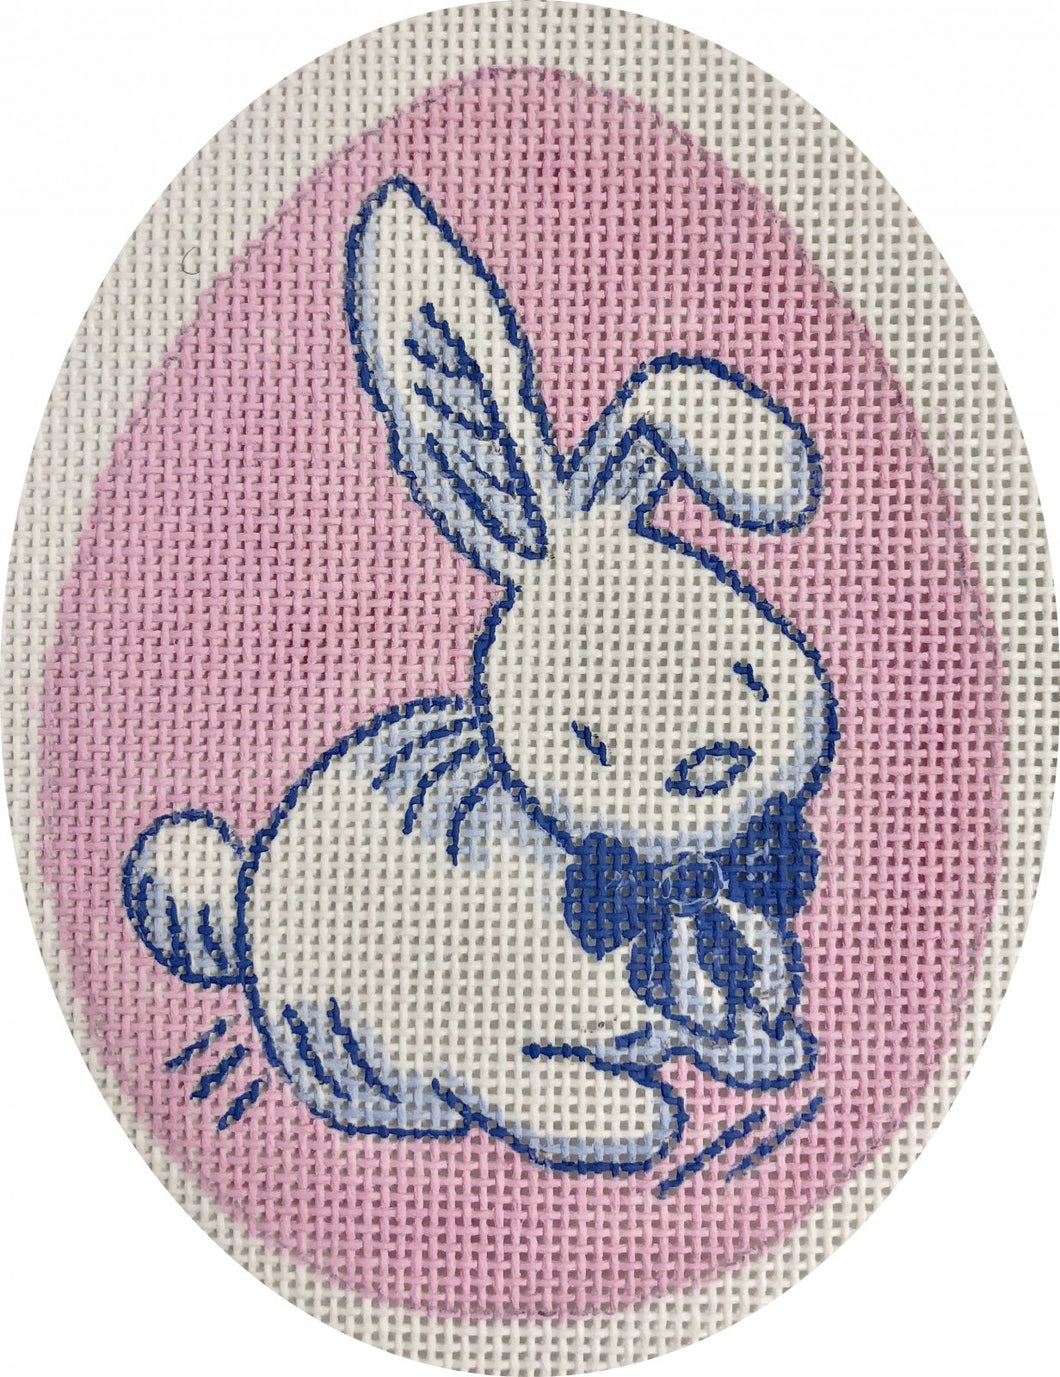 APEA05 rabbit, pink